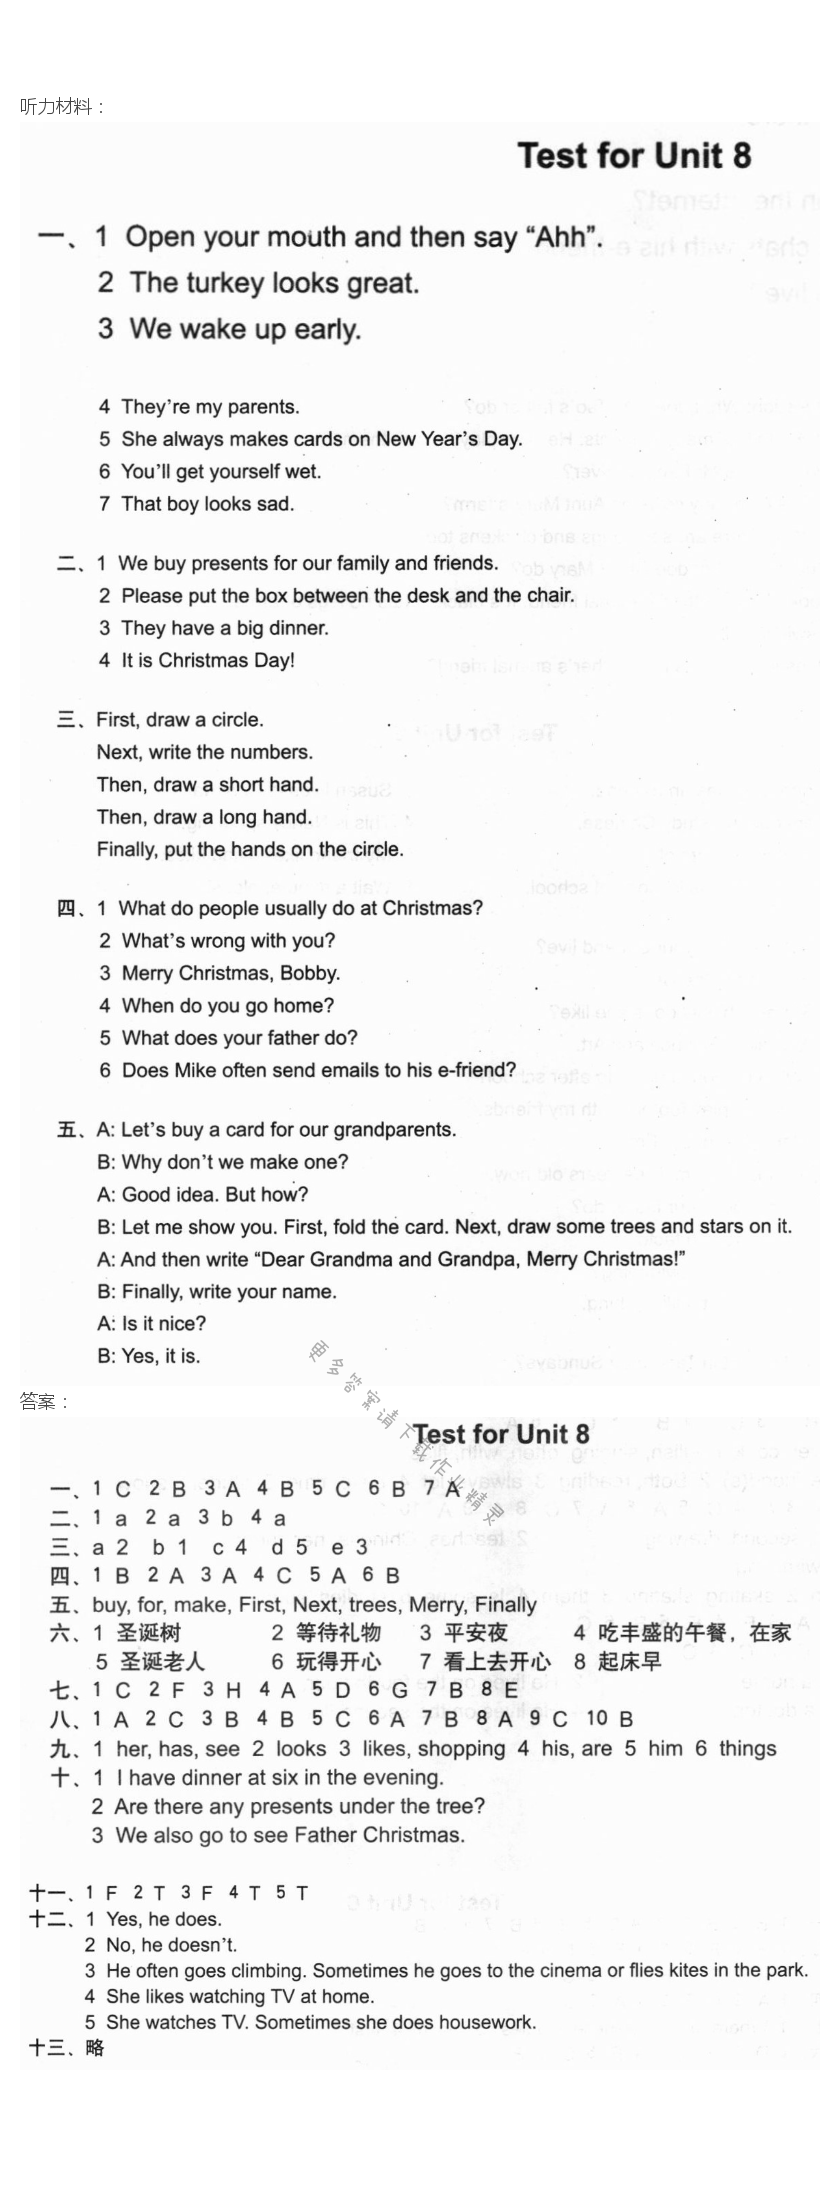 Test for Unit 8